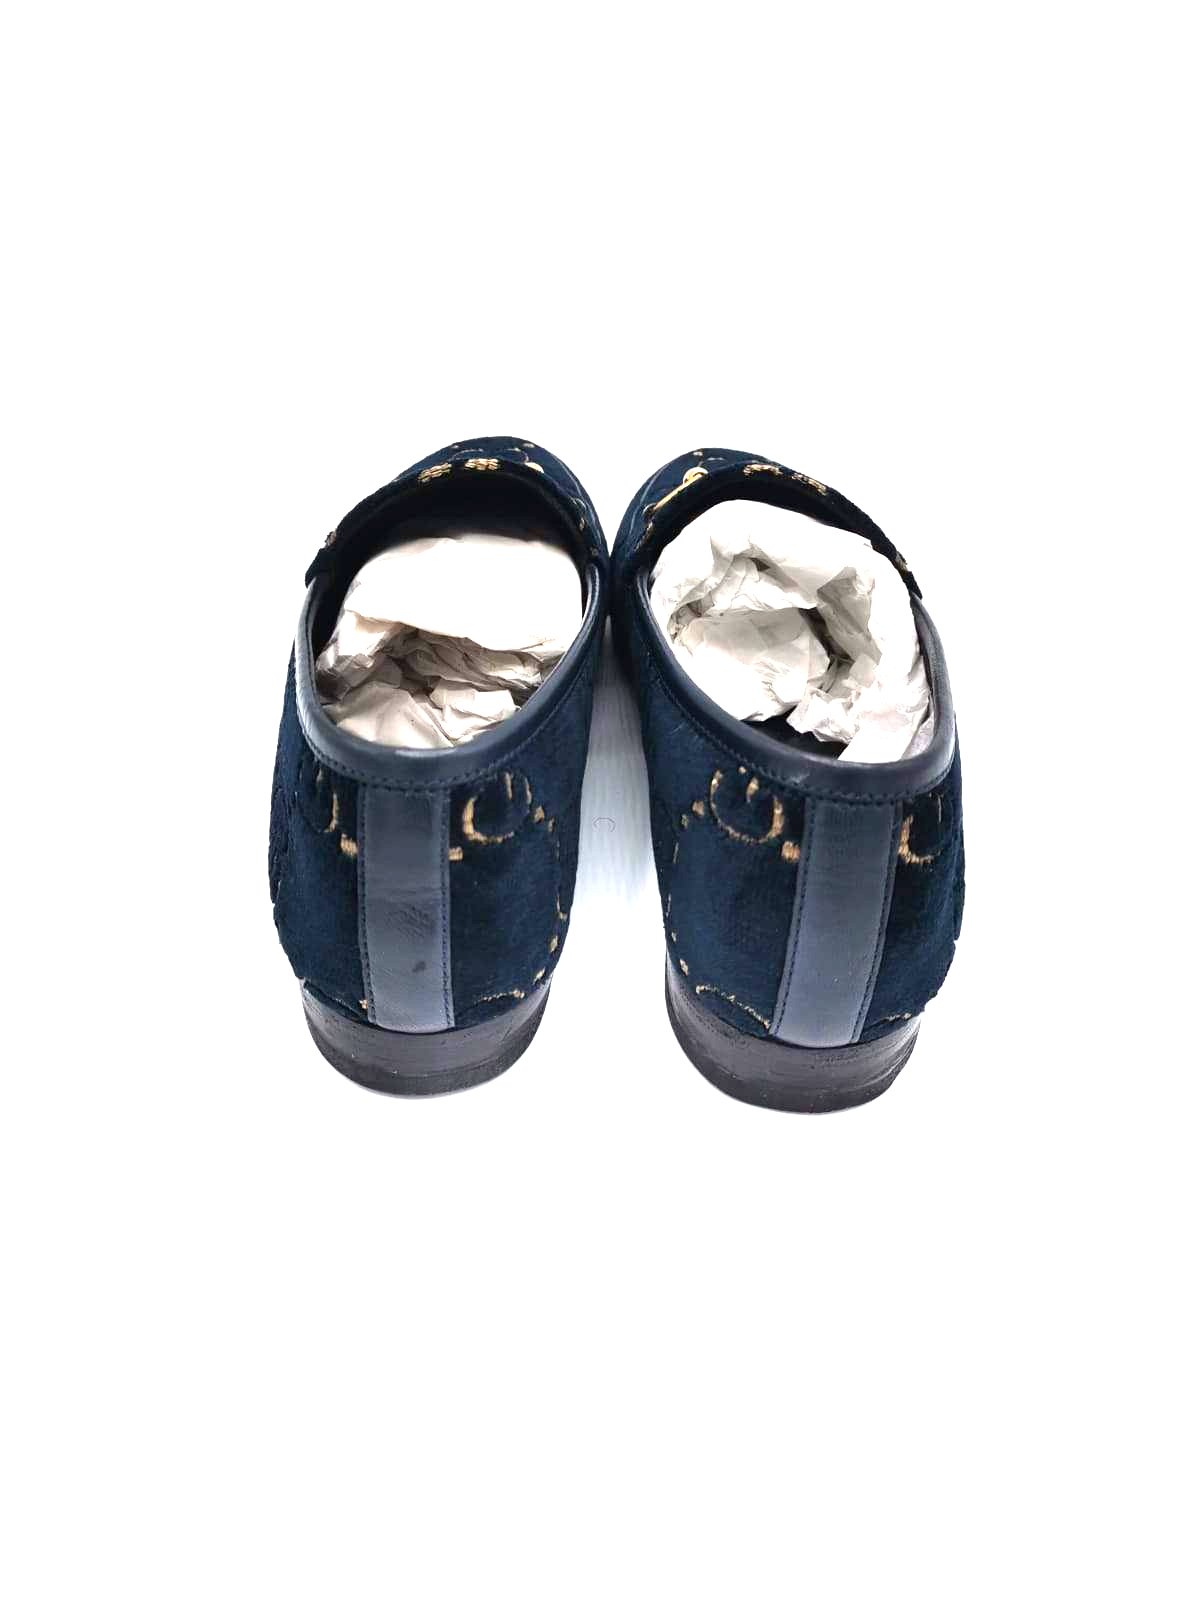 Gucci jordaan midnight blue velvet size 36 RRP £595